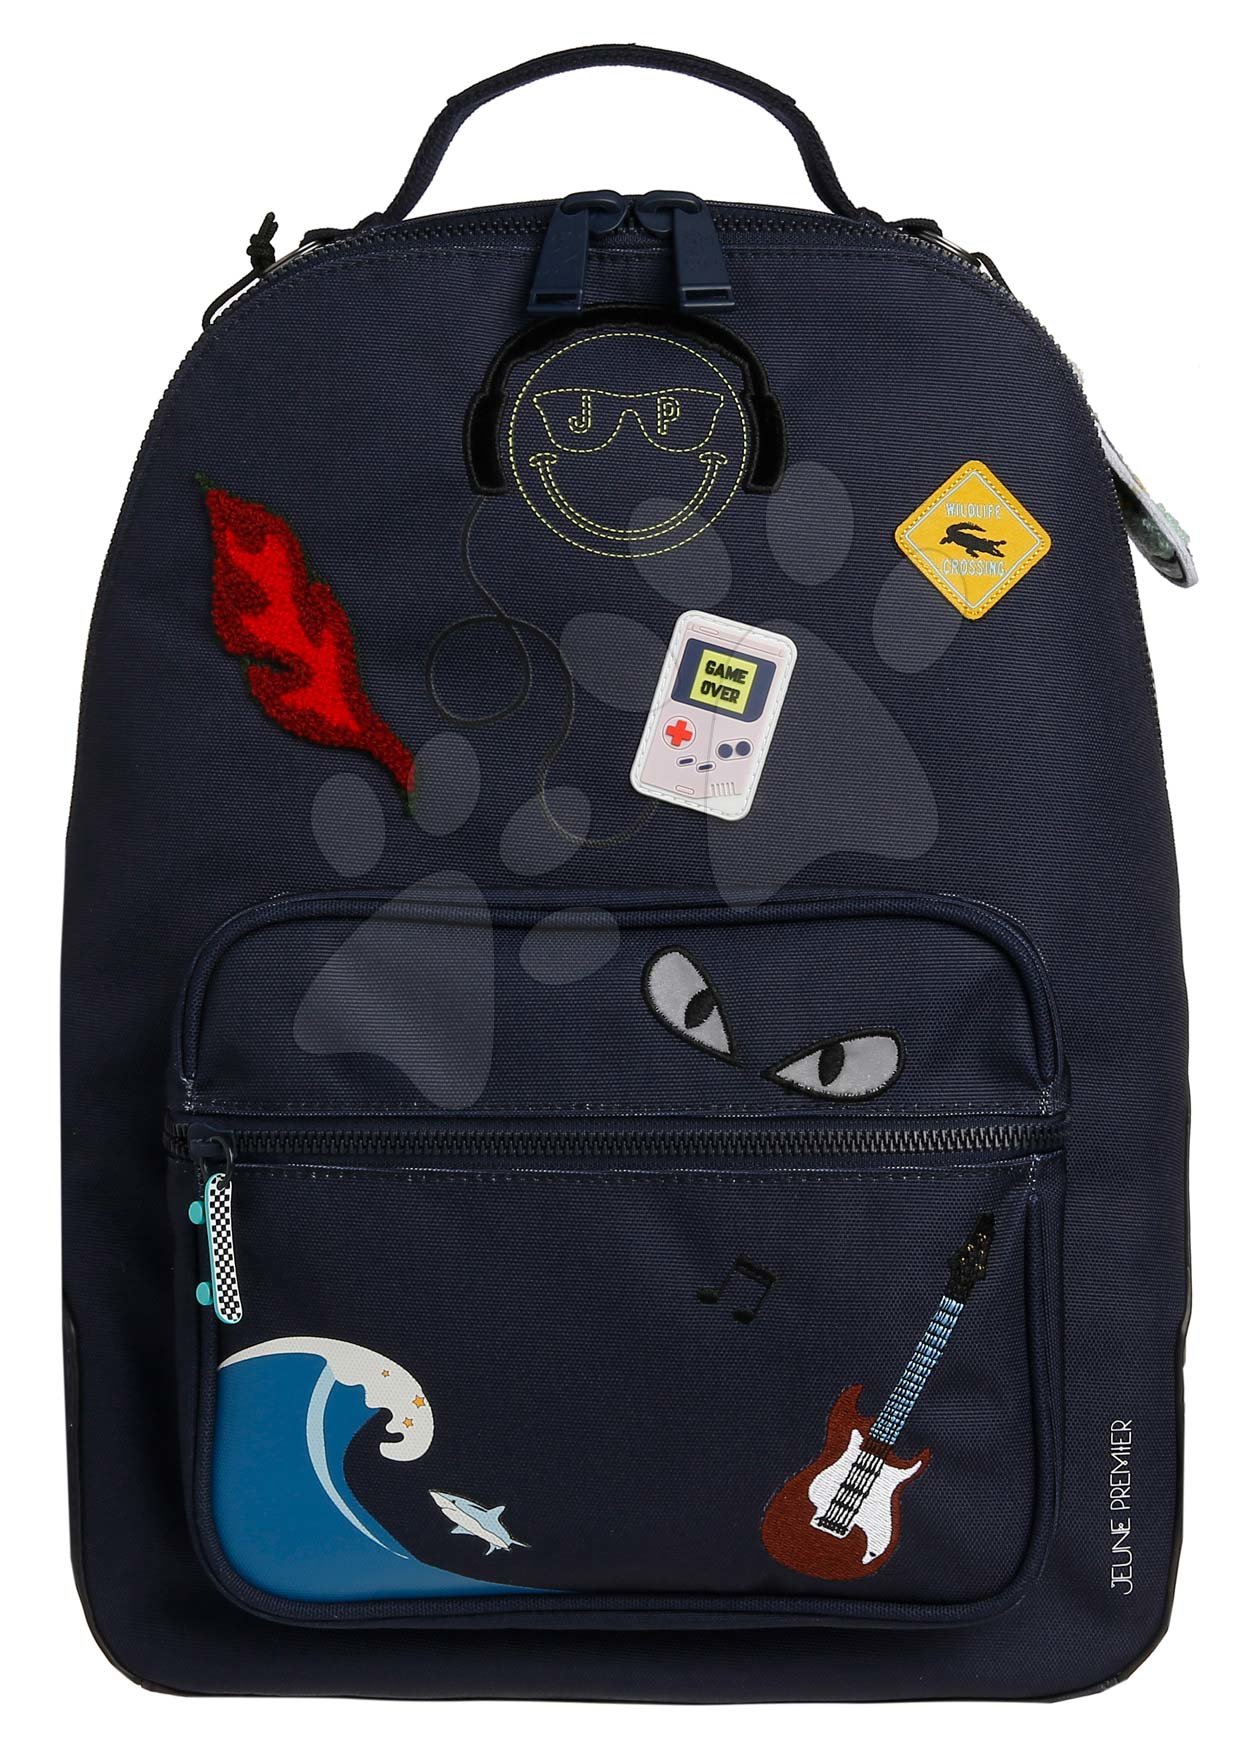 Školské tašky a batohy - Školská taška batoh Backpack Bobbie Mr. Gadget Jeune Premier ergonomická luxusné prevedenie 41*30 cm